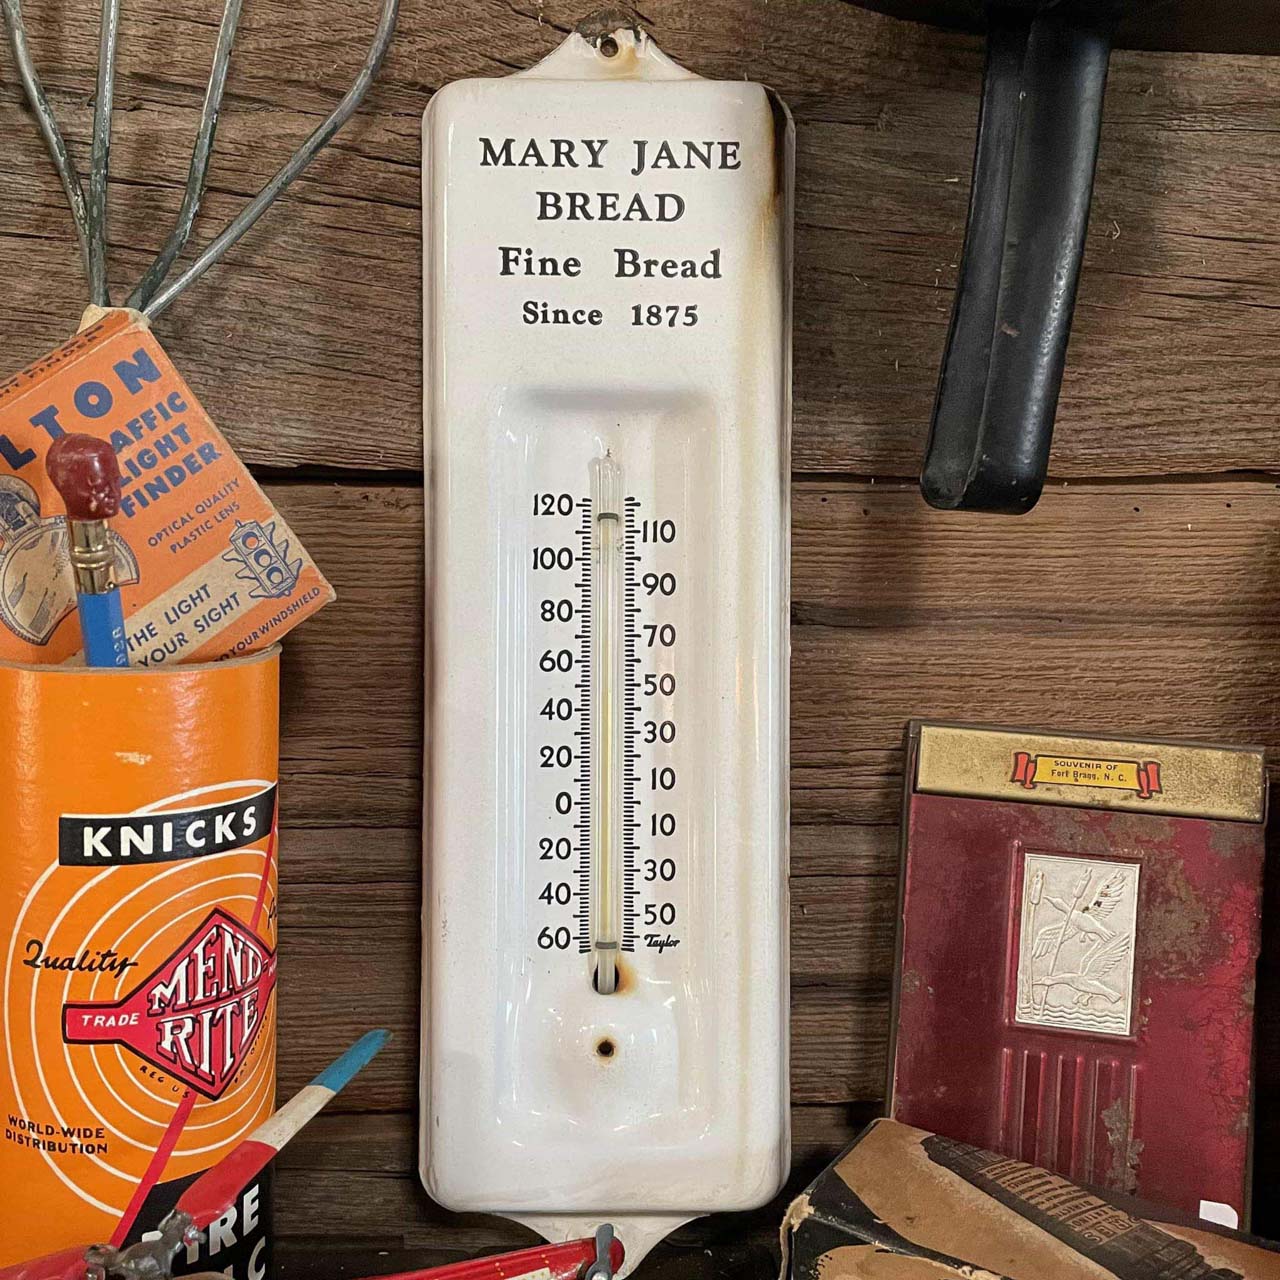 Mary Jane Bread Fine Bread Since 1875 Porcelain Thermometer Rare